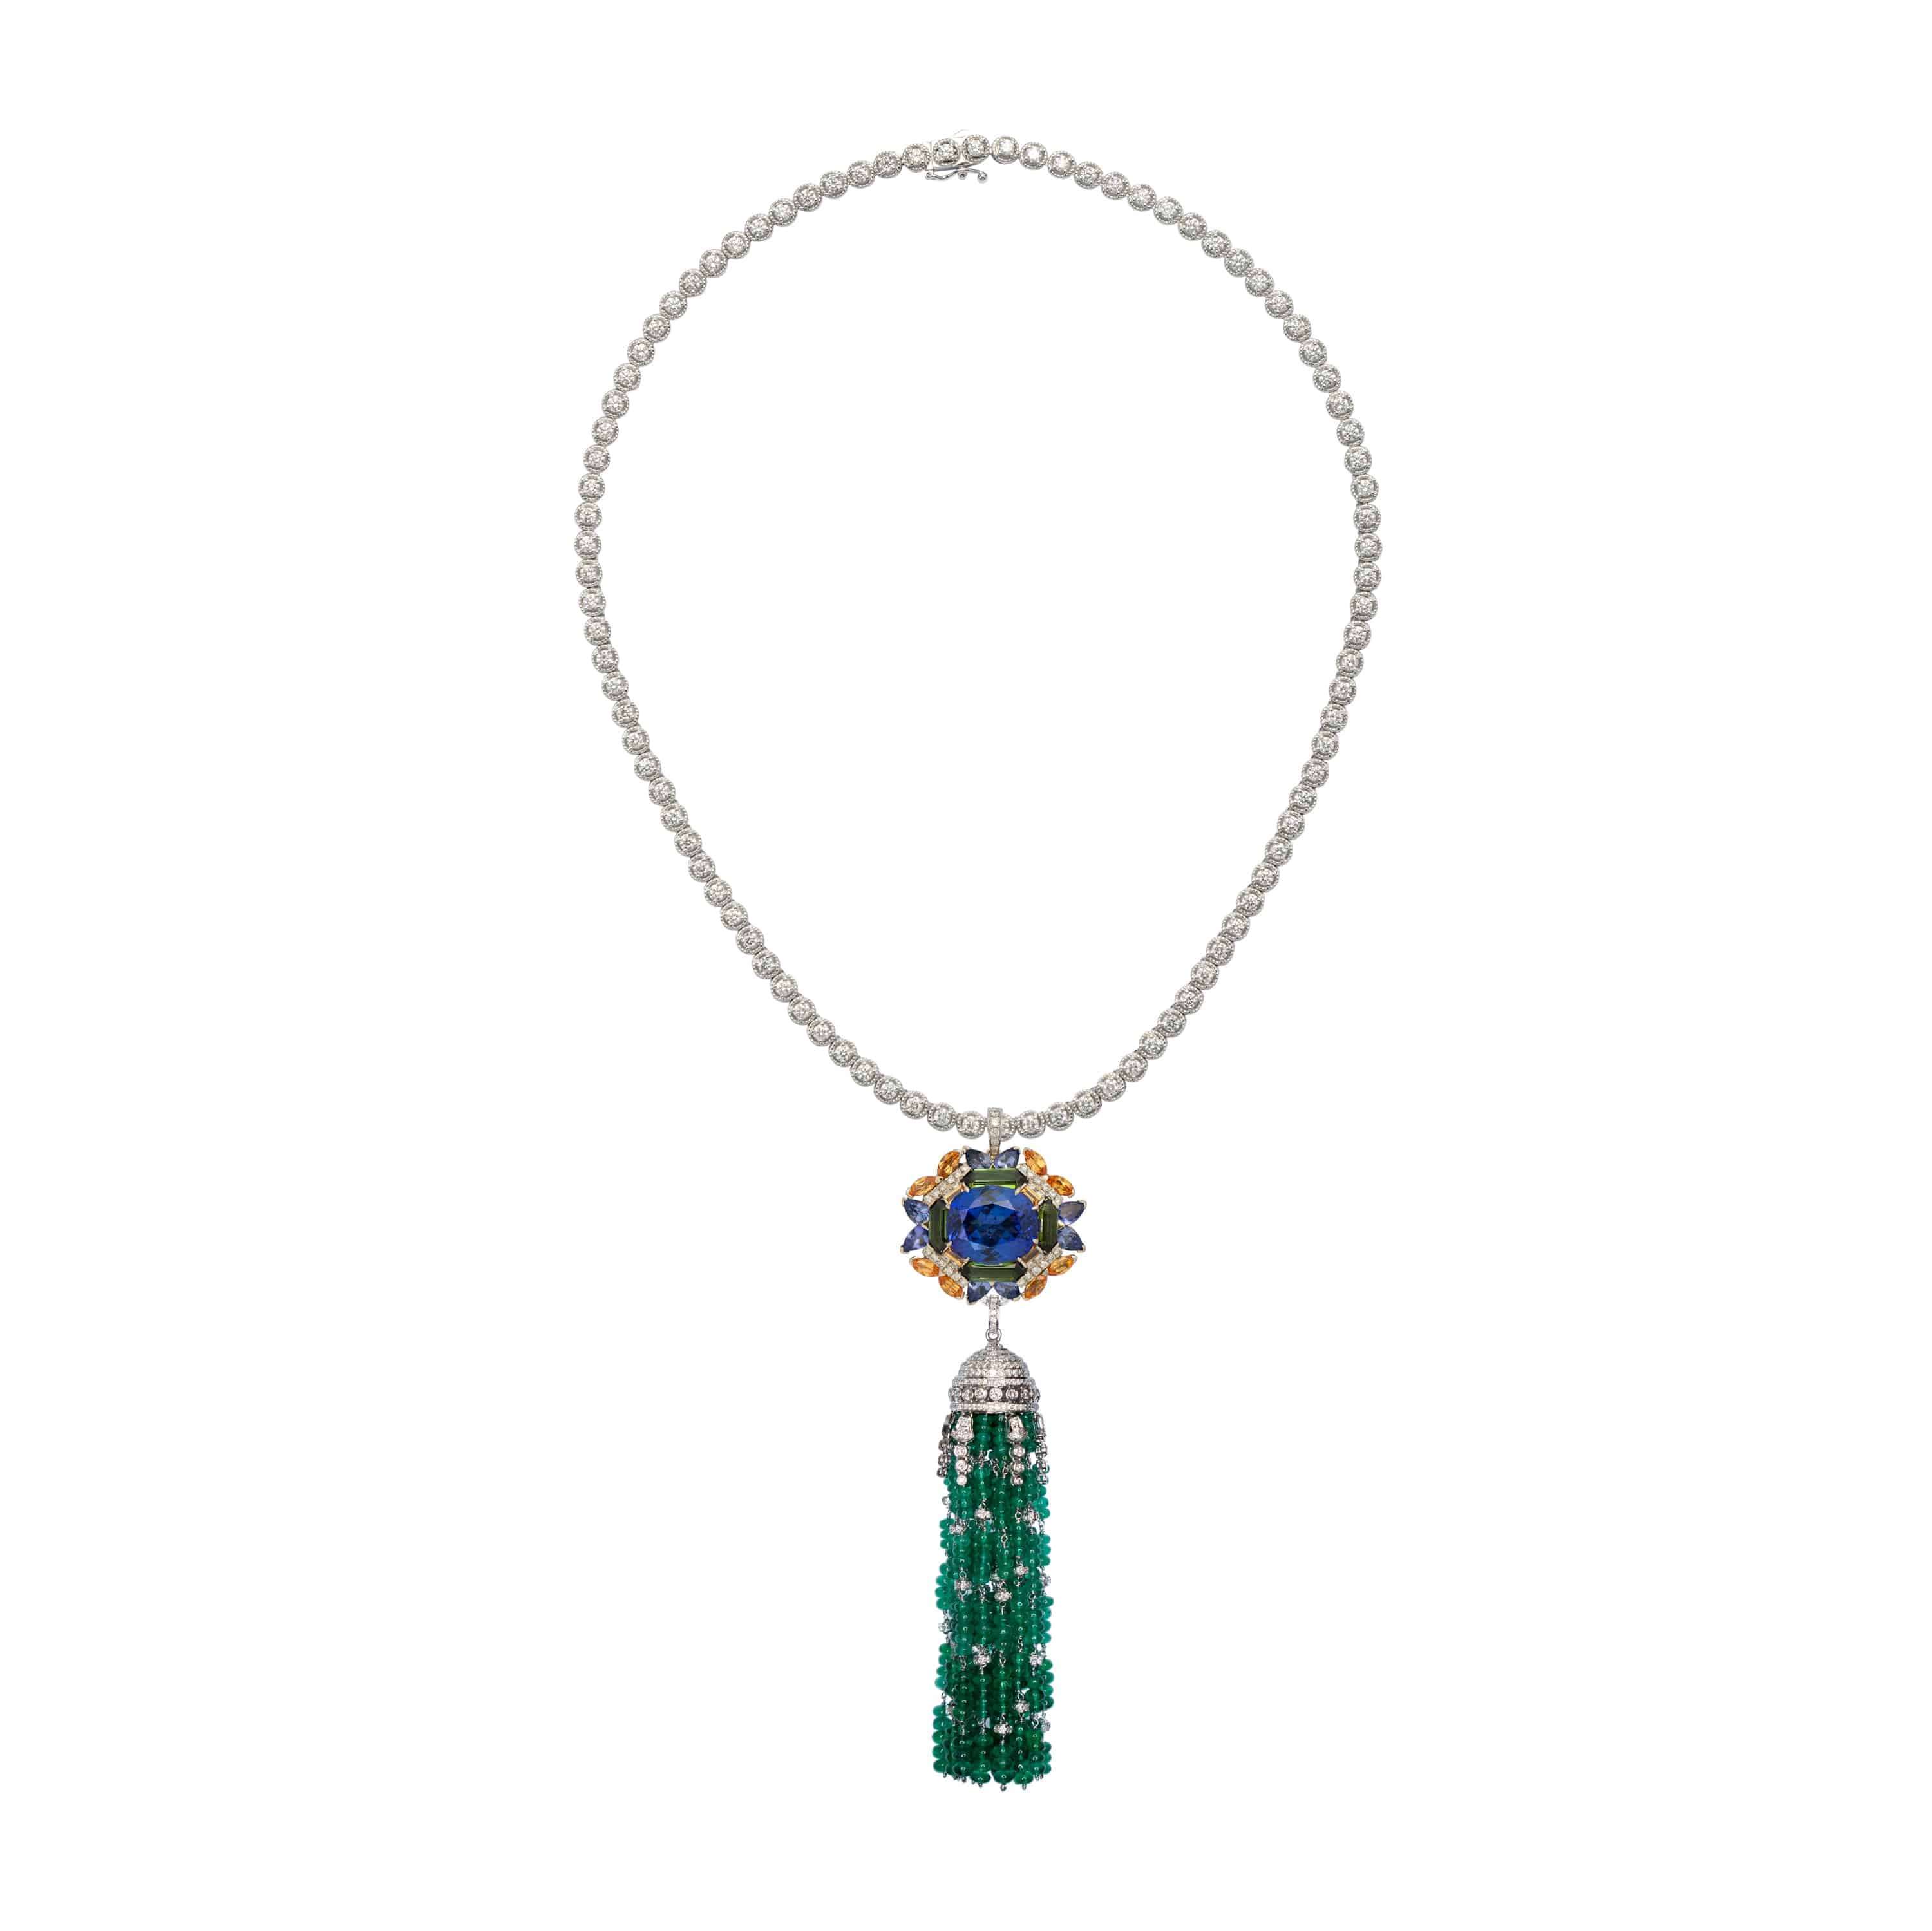 transformational-tanzanite-emerald-diamond-necklace-ring-pendant-43710309728420.jpg